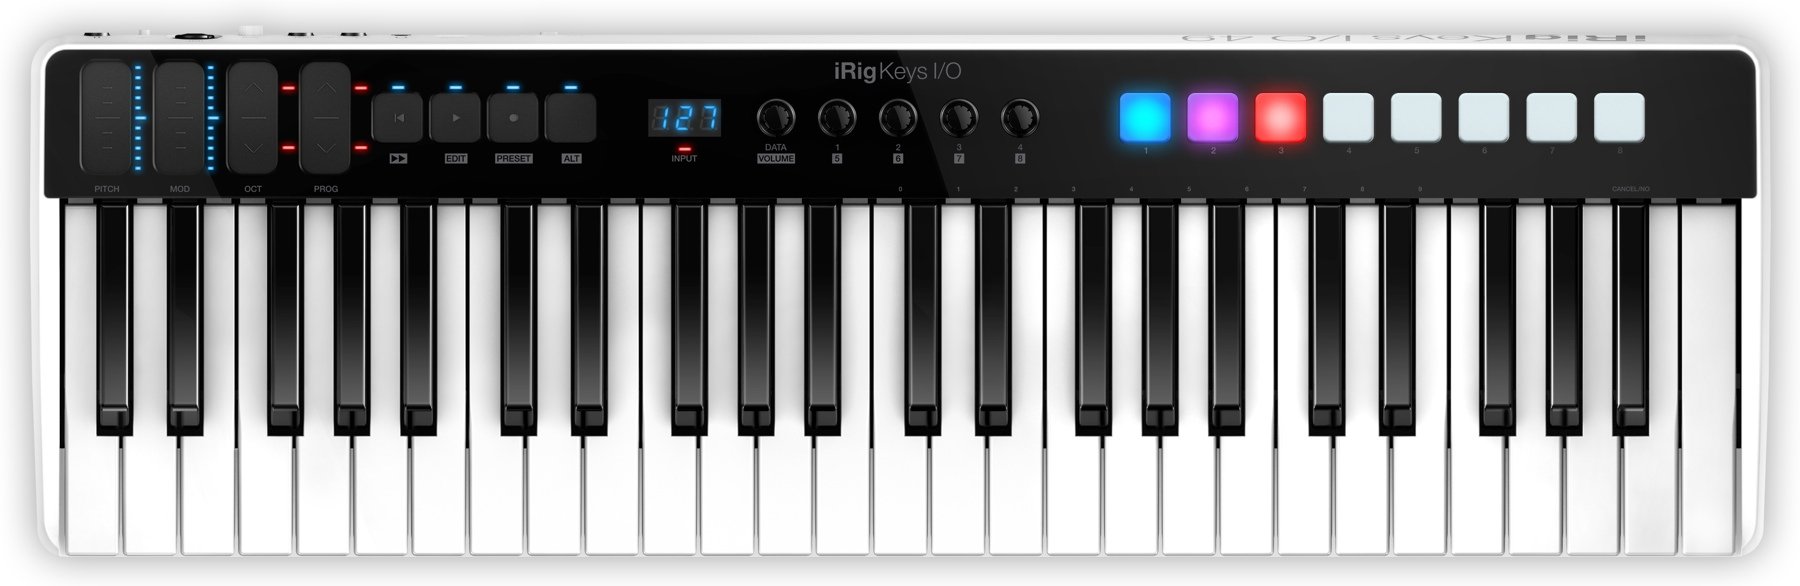 Best piano keyboard for macbook pro